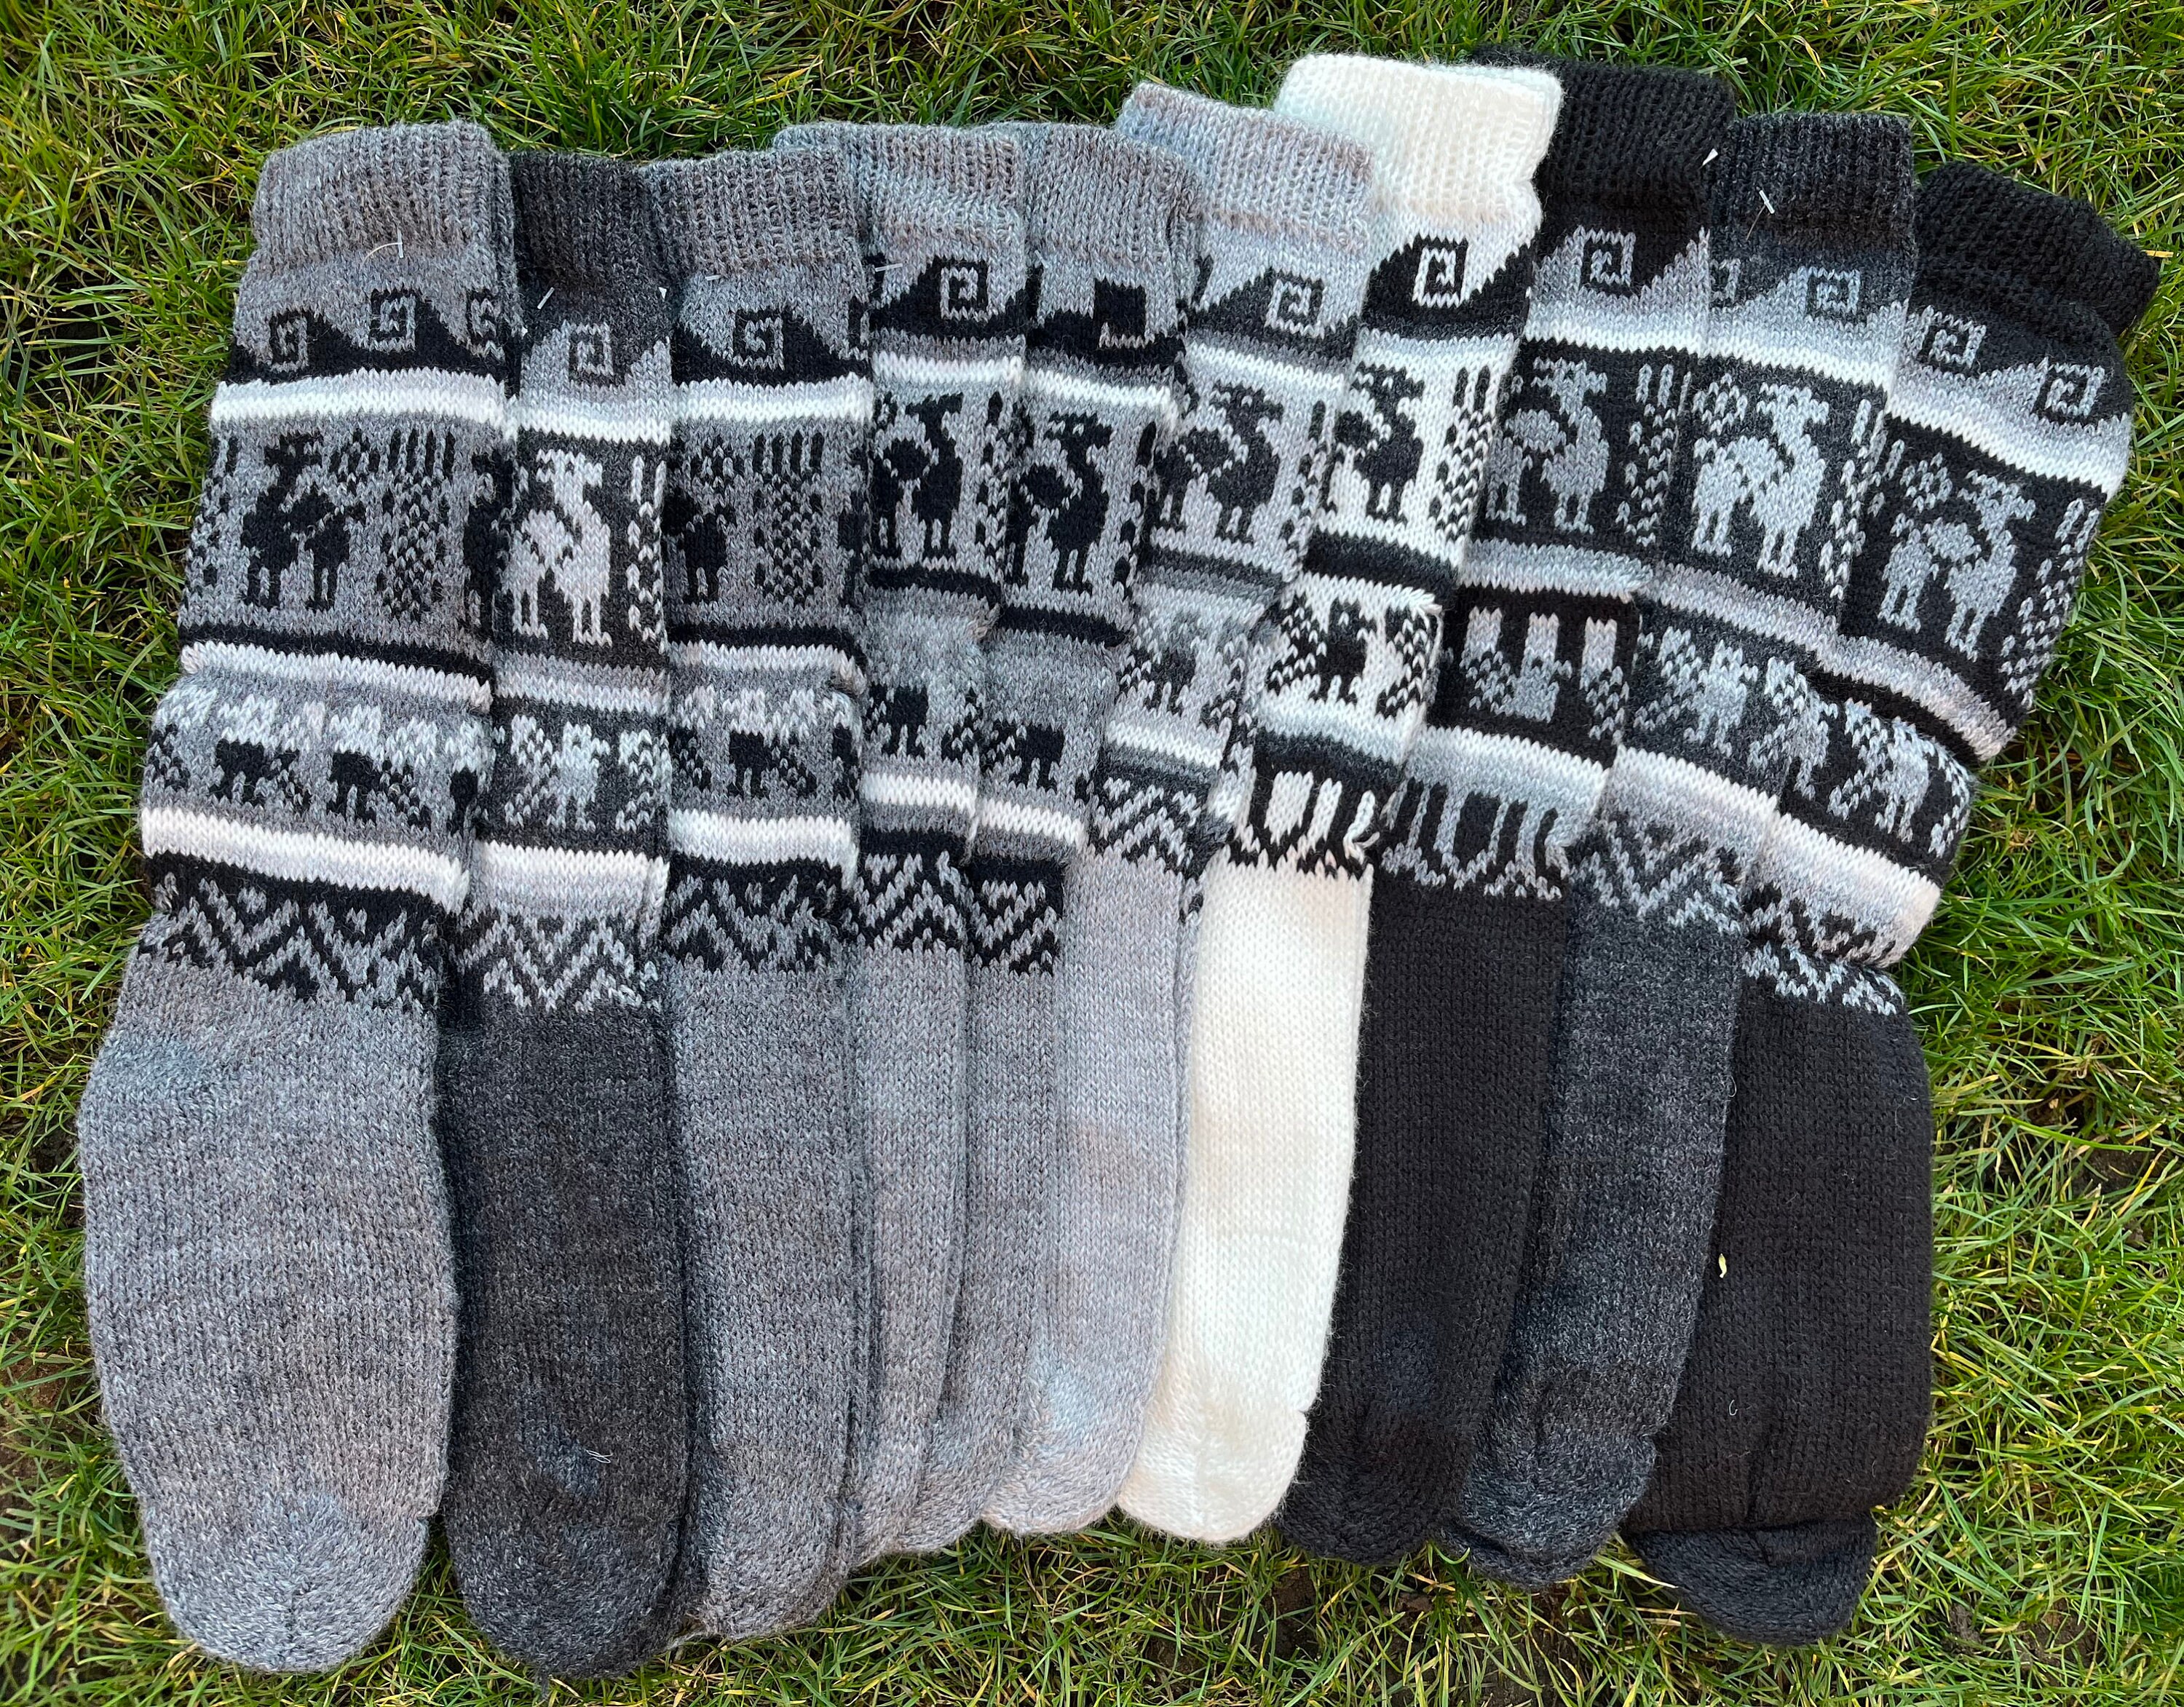 New Alpaca Wool Socks Soft Llama Peru Fairtrade Warm Size 5-10 38-43 Dark Brown 